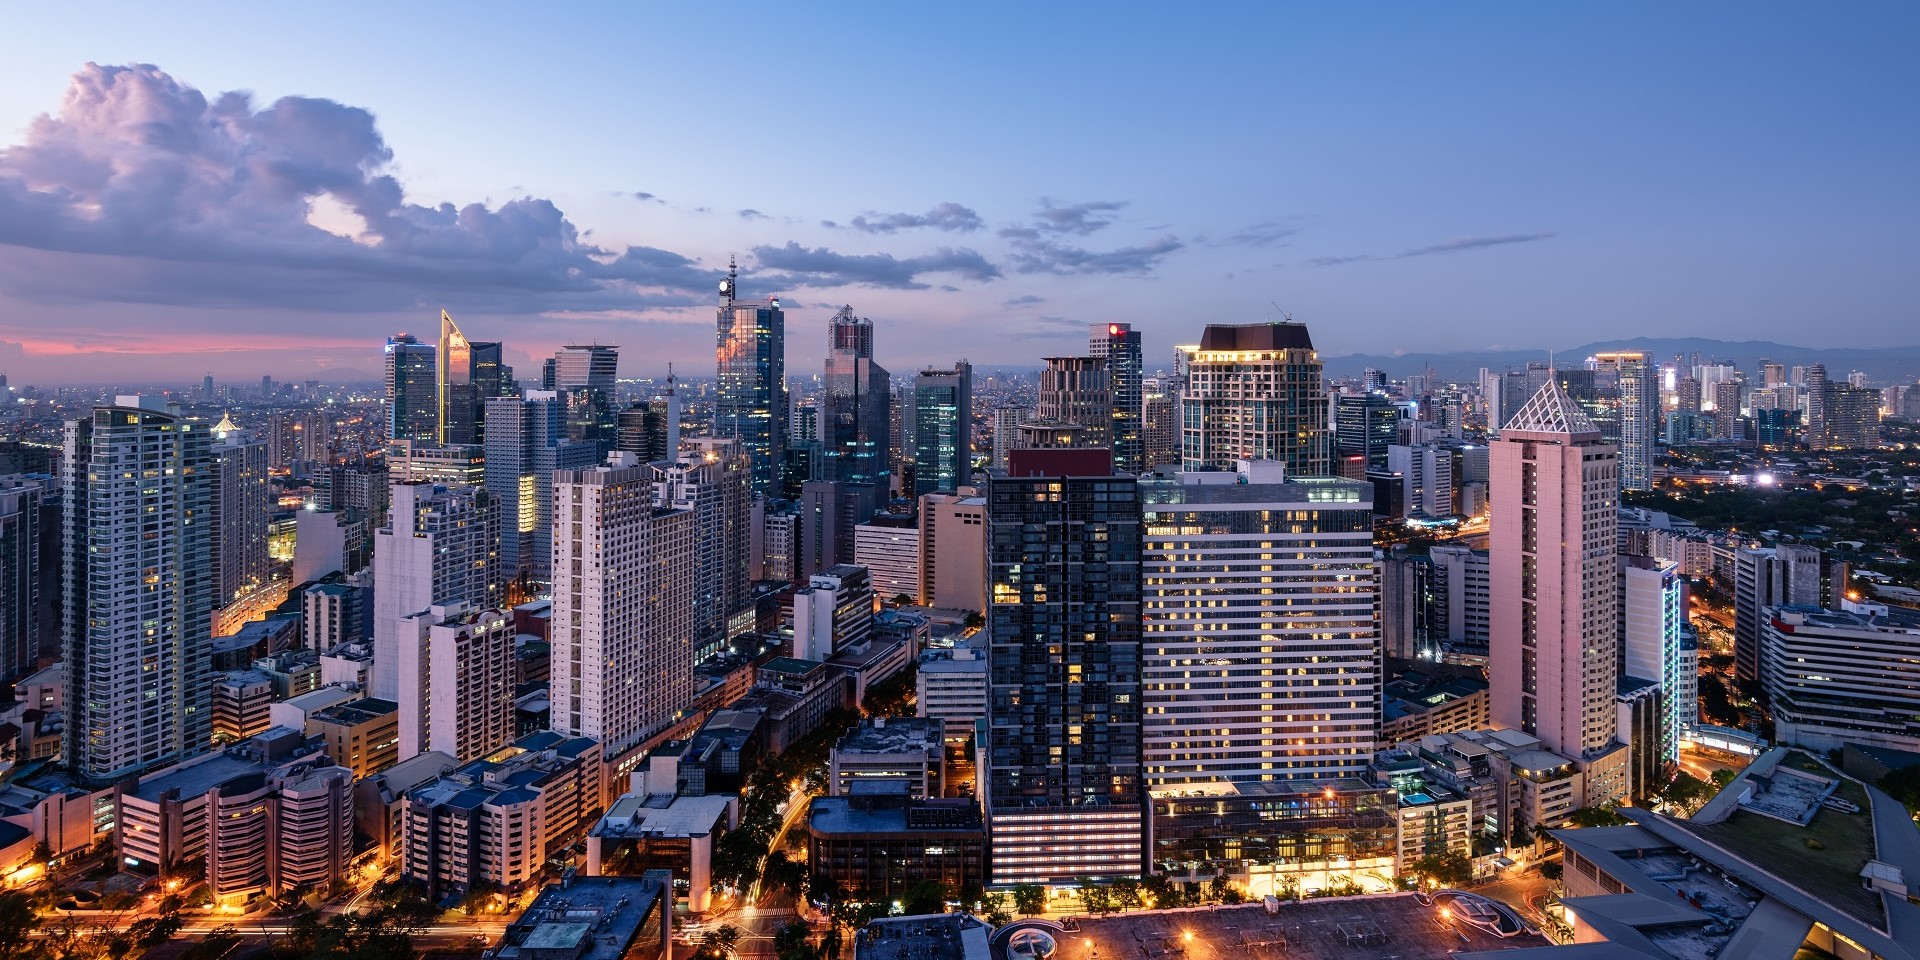 The Manila business district skyline